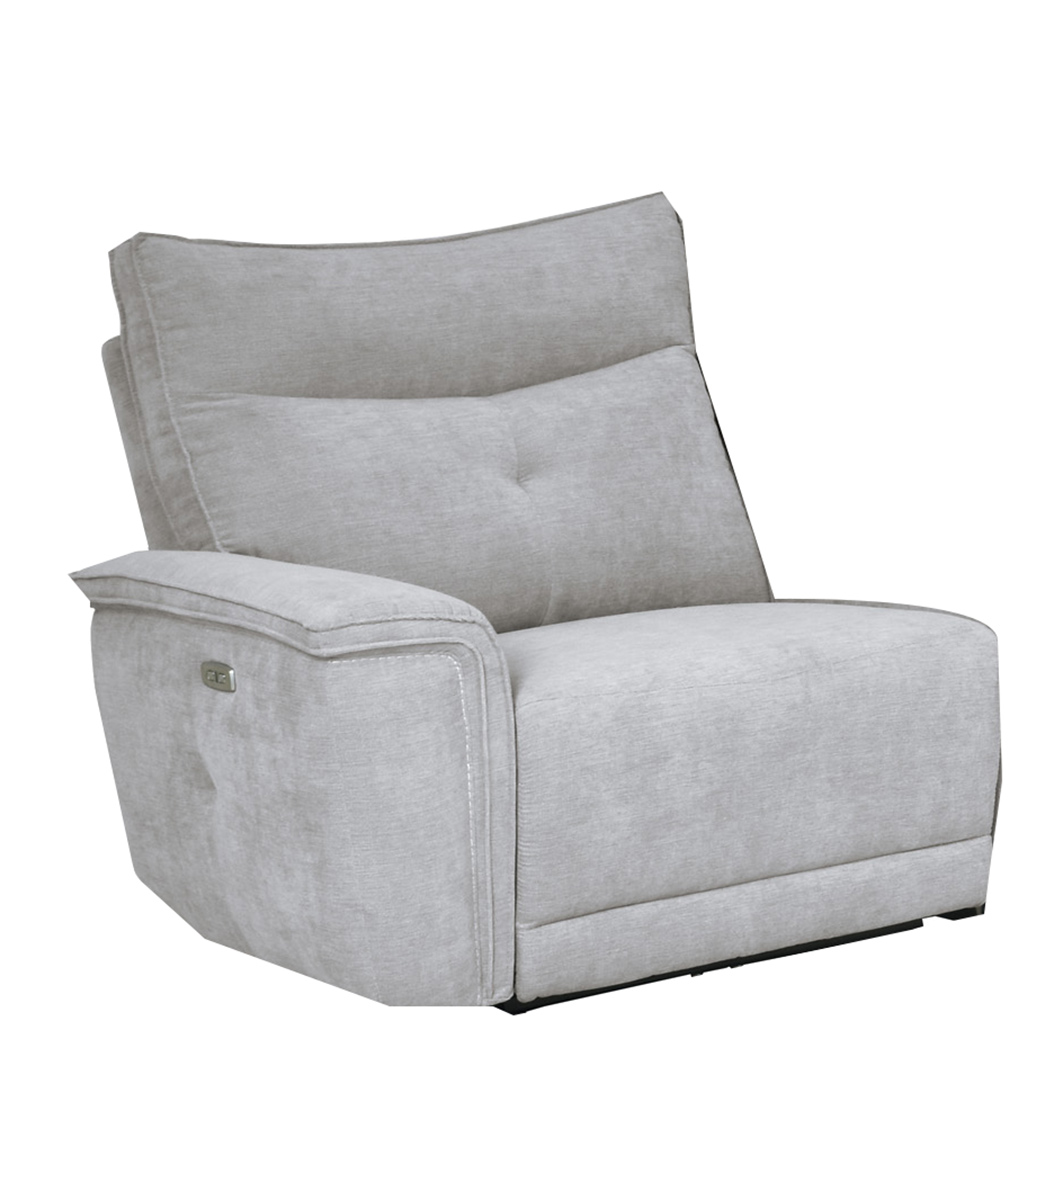 Homelegance Tesoro Power Left Side Reclining Chair with Power Headrest - Mist Gray